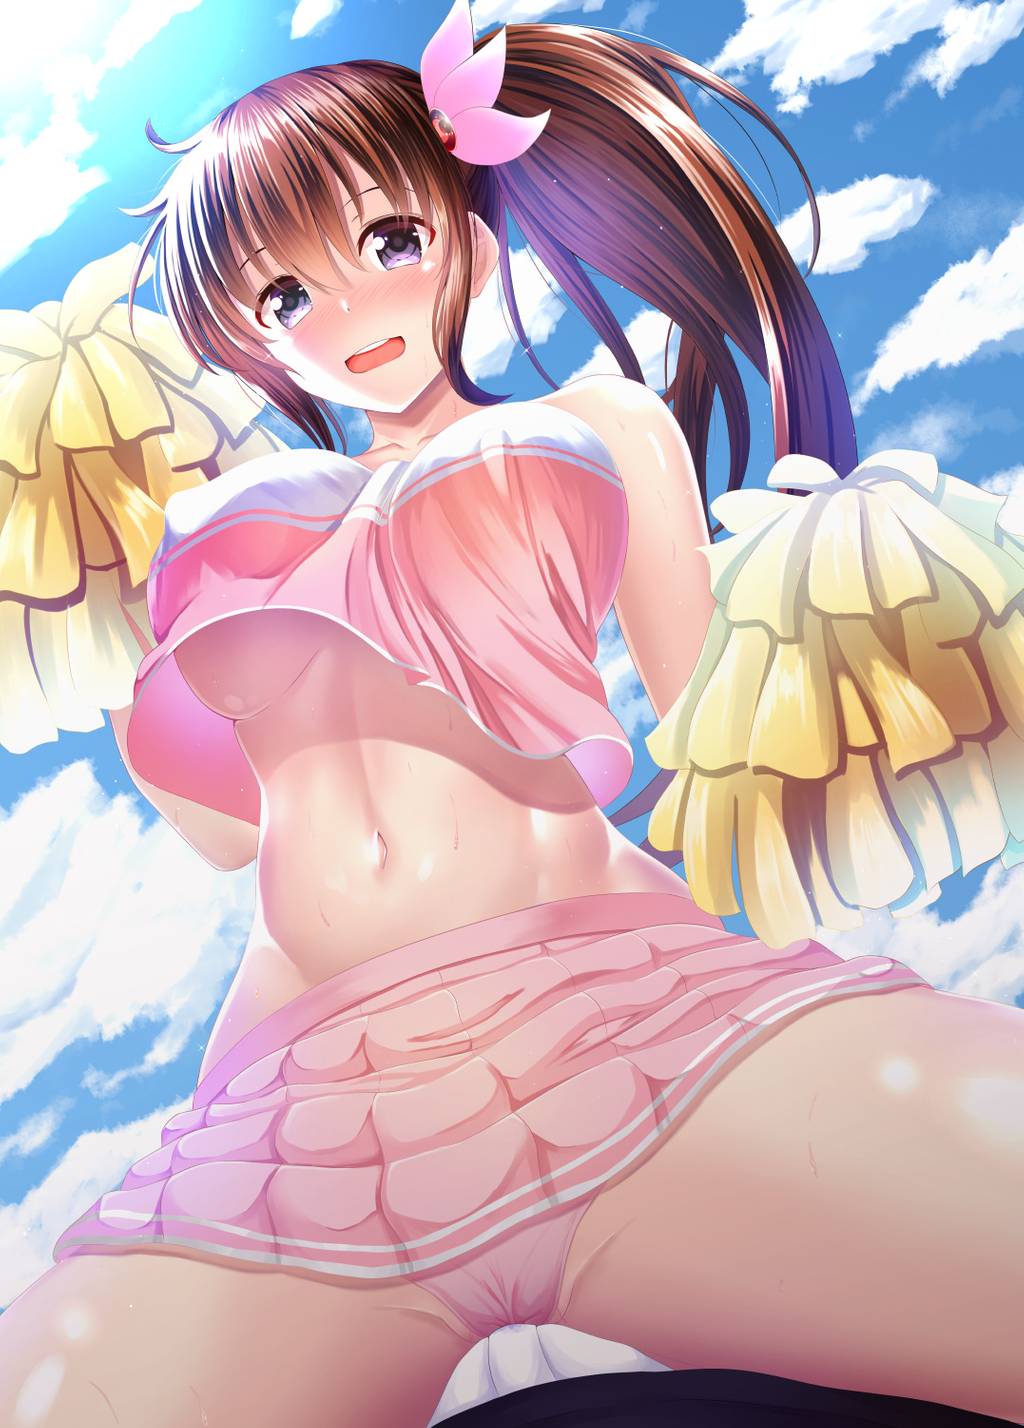 Hot Nude Anime girl waking up